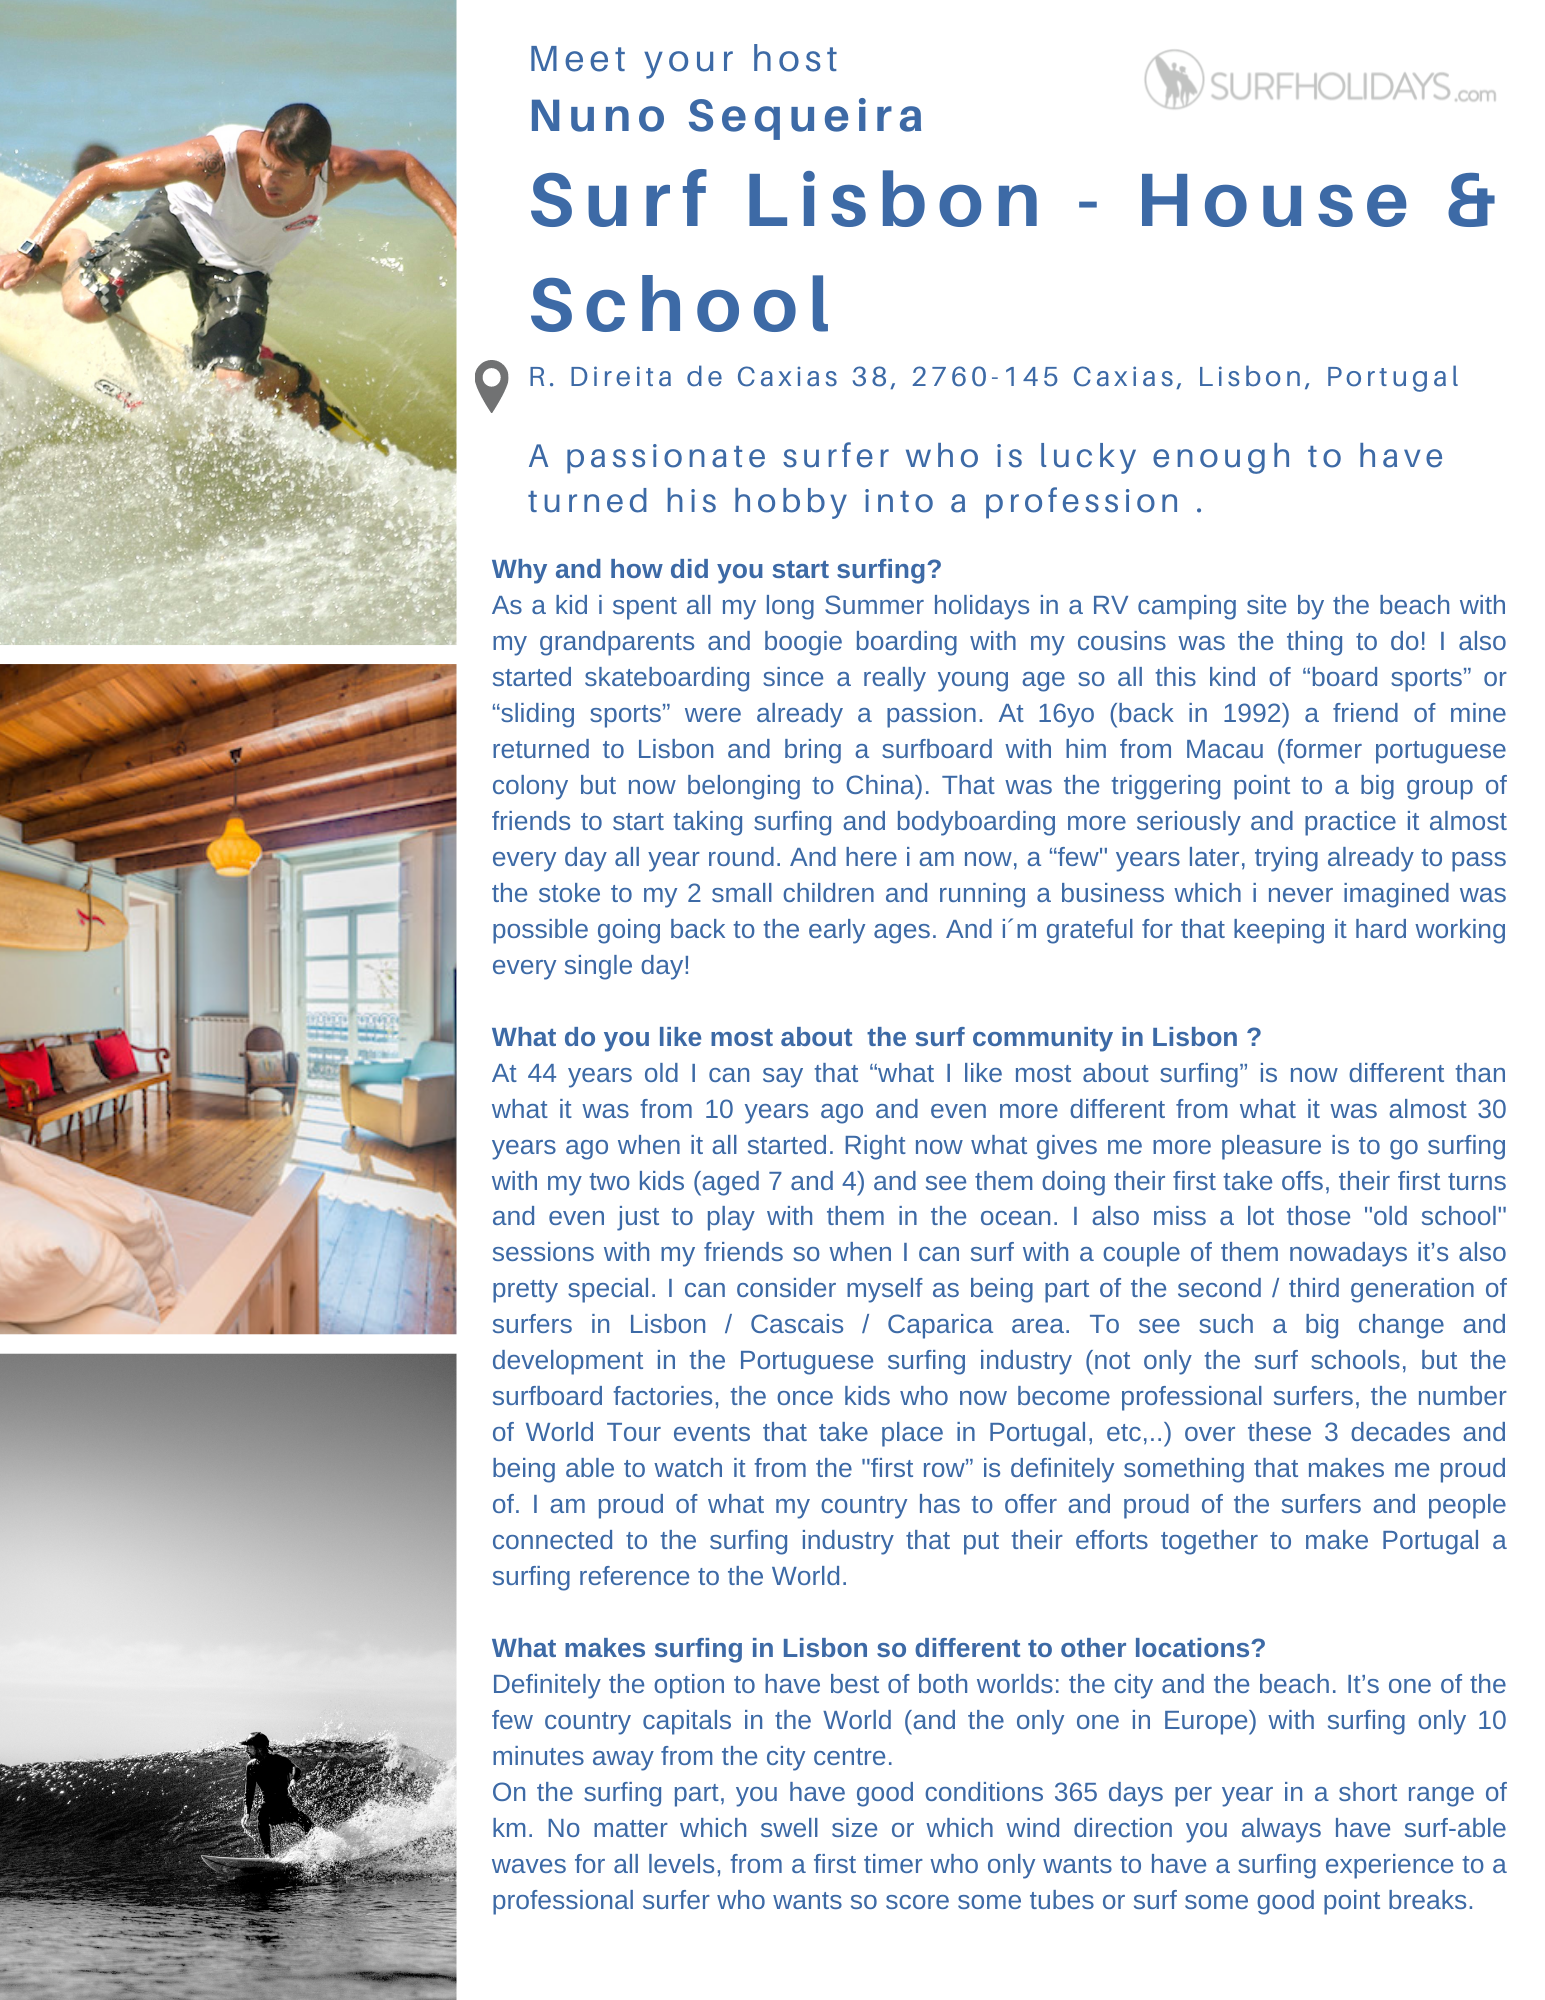 Meet your Host - Nuno from Surf Lisbon - House & School